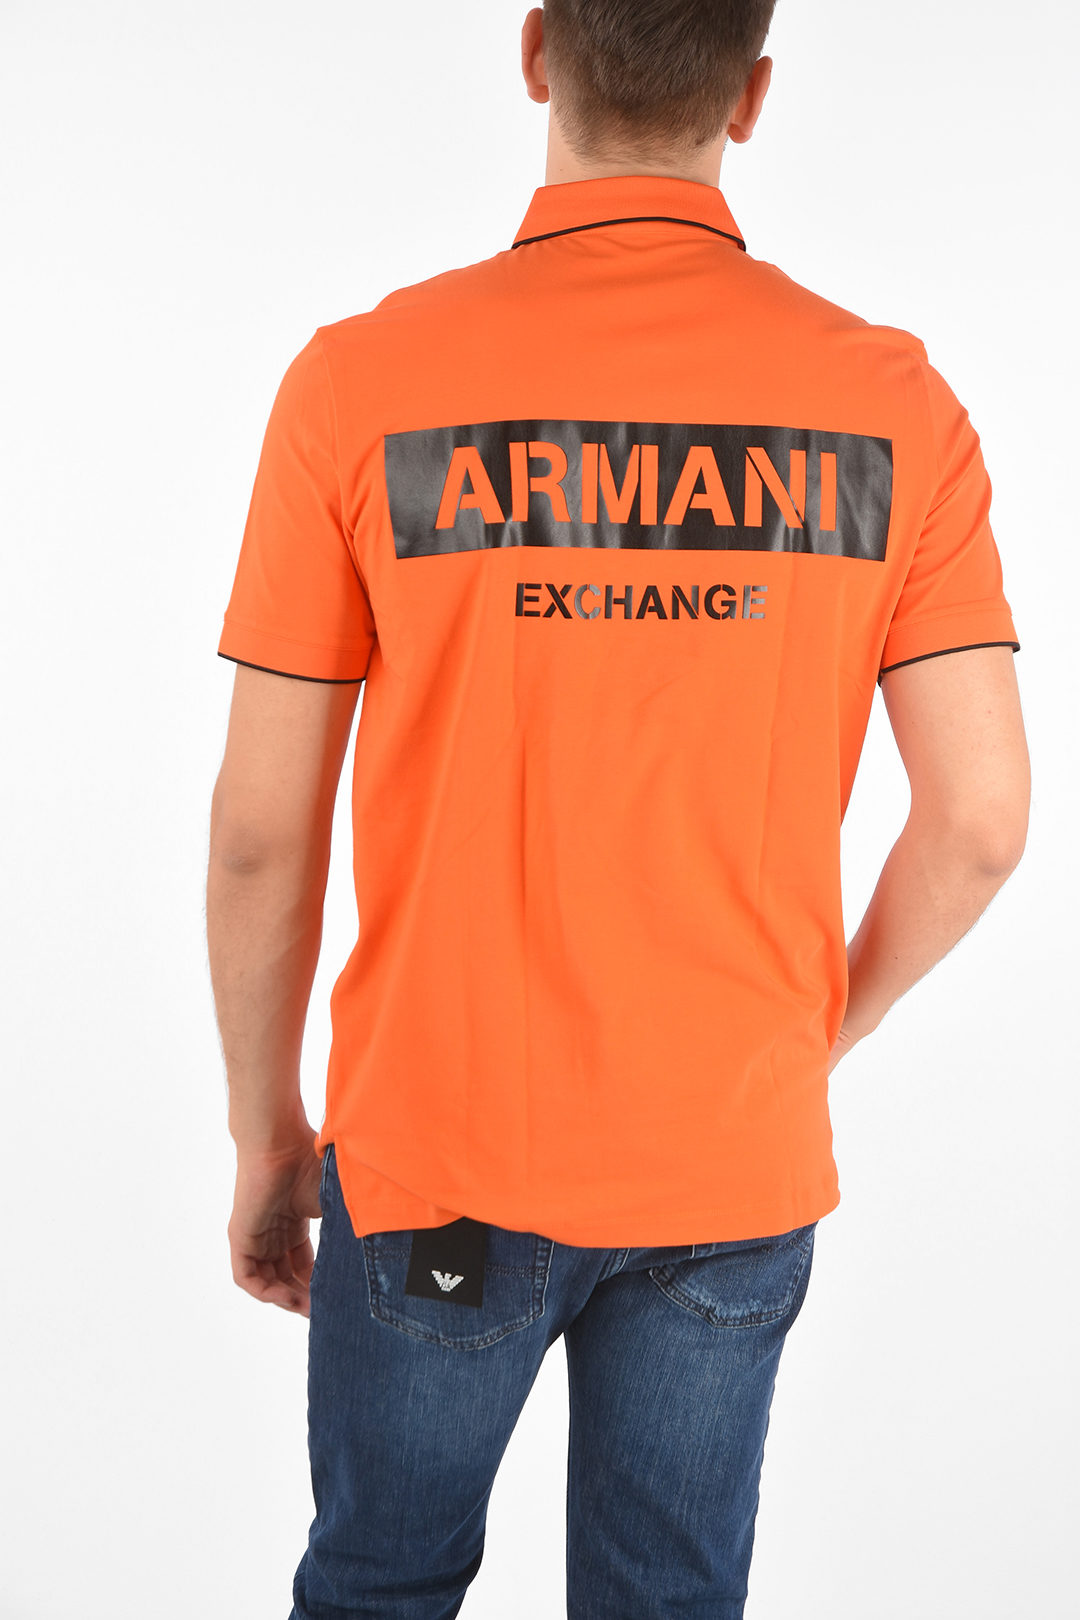 Armani ARMANI EXCHANGE back polo shirt men Glamood Outlet